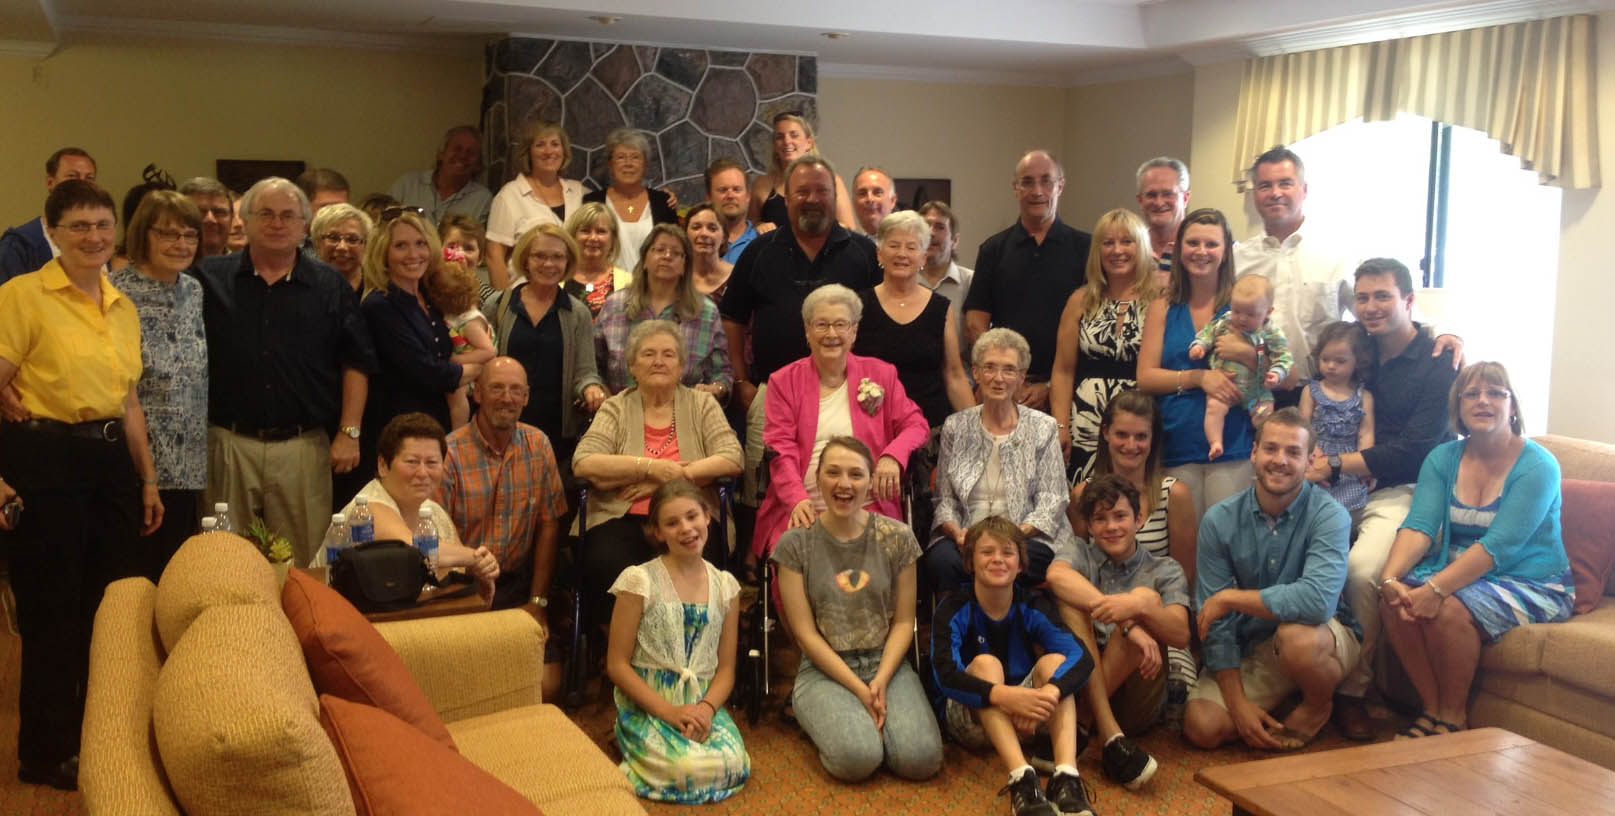 Summer Fun and Festivities at Avalon Retirement Lodge